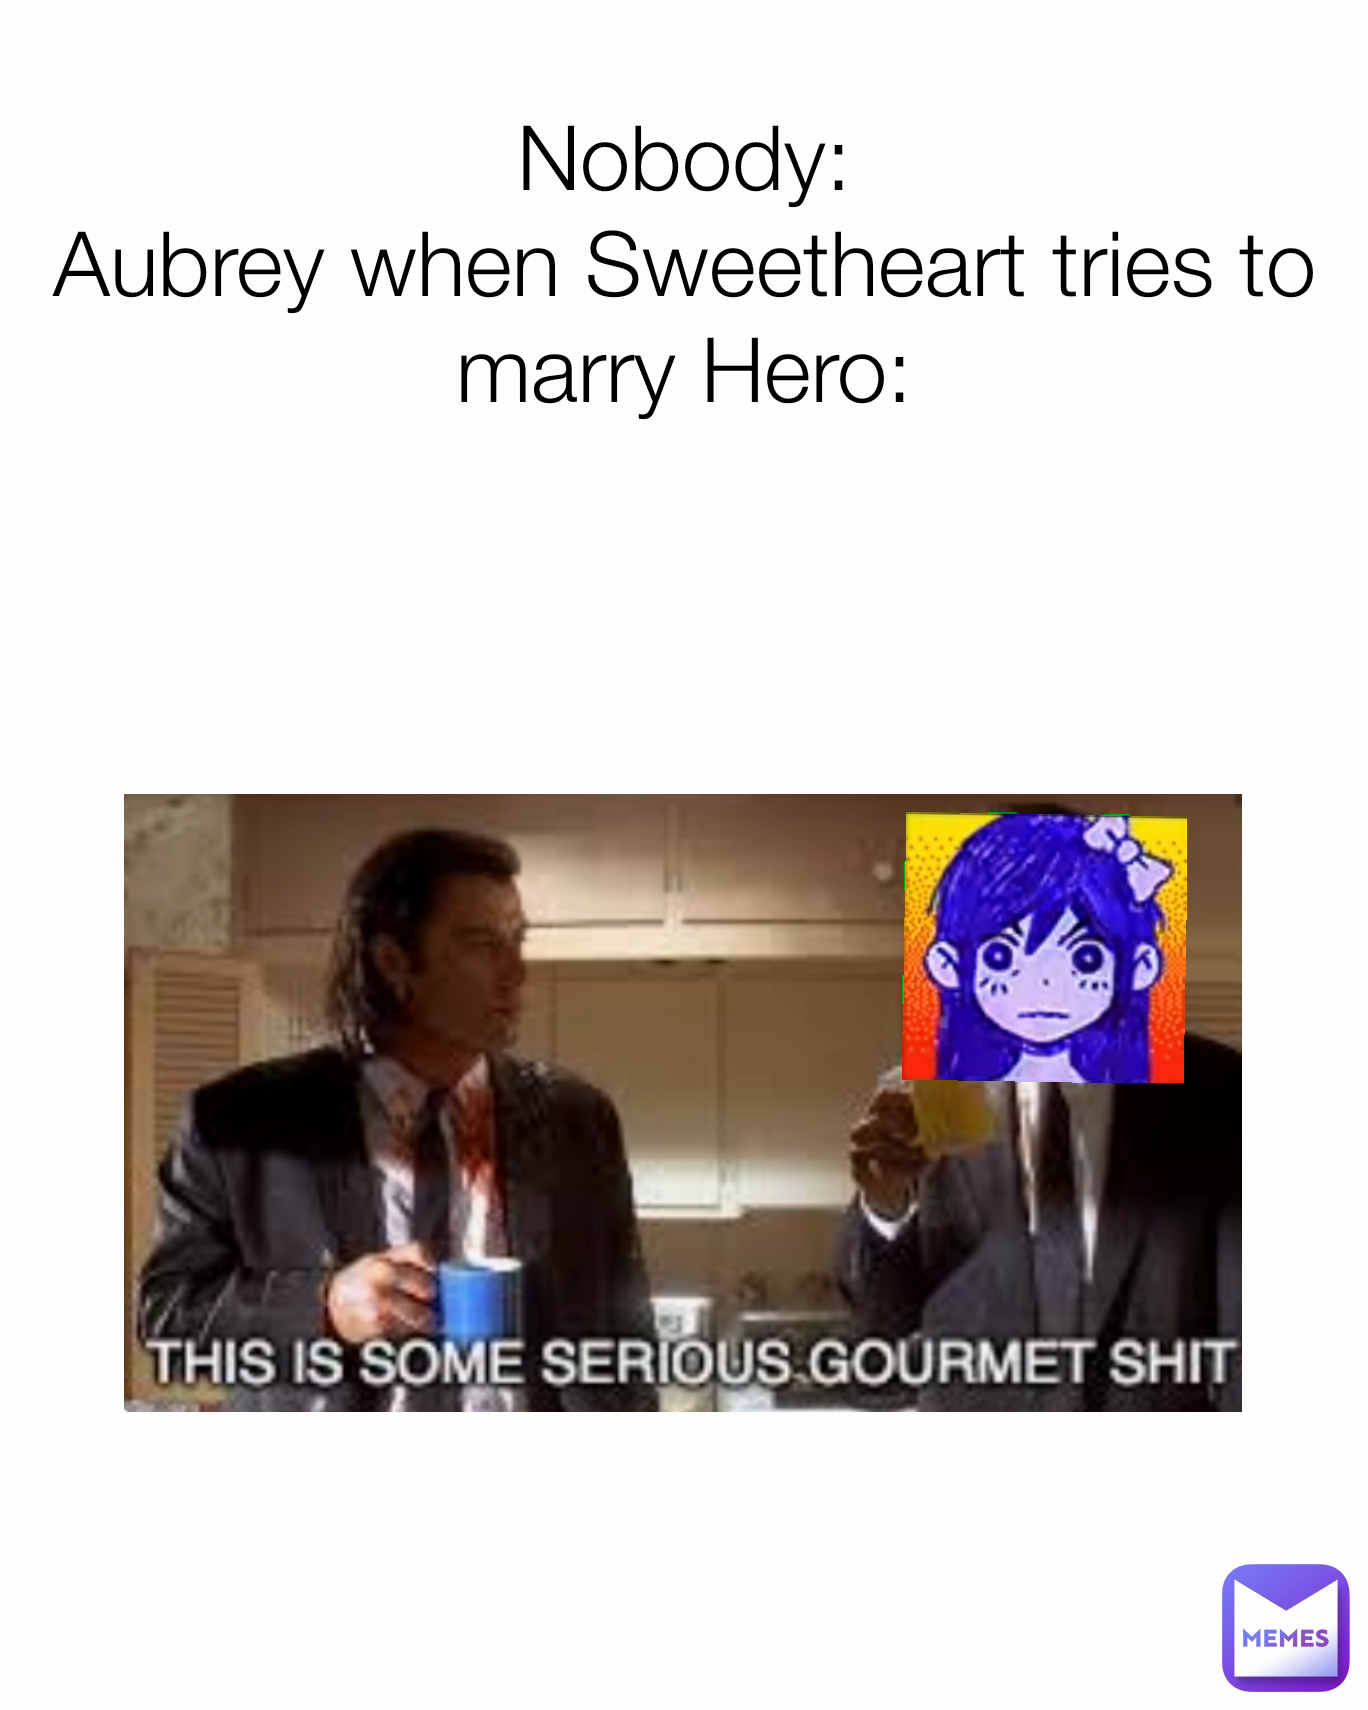 Nobody:
Aubrey when Sweetheart tries to marry Hero: